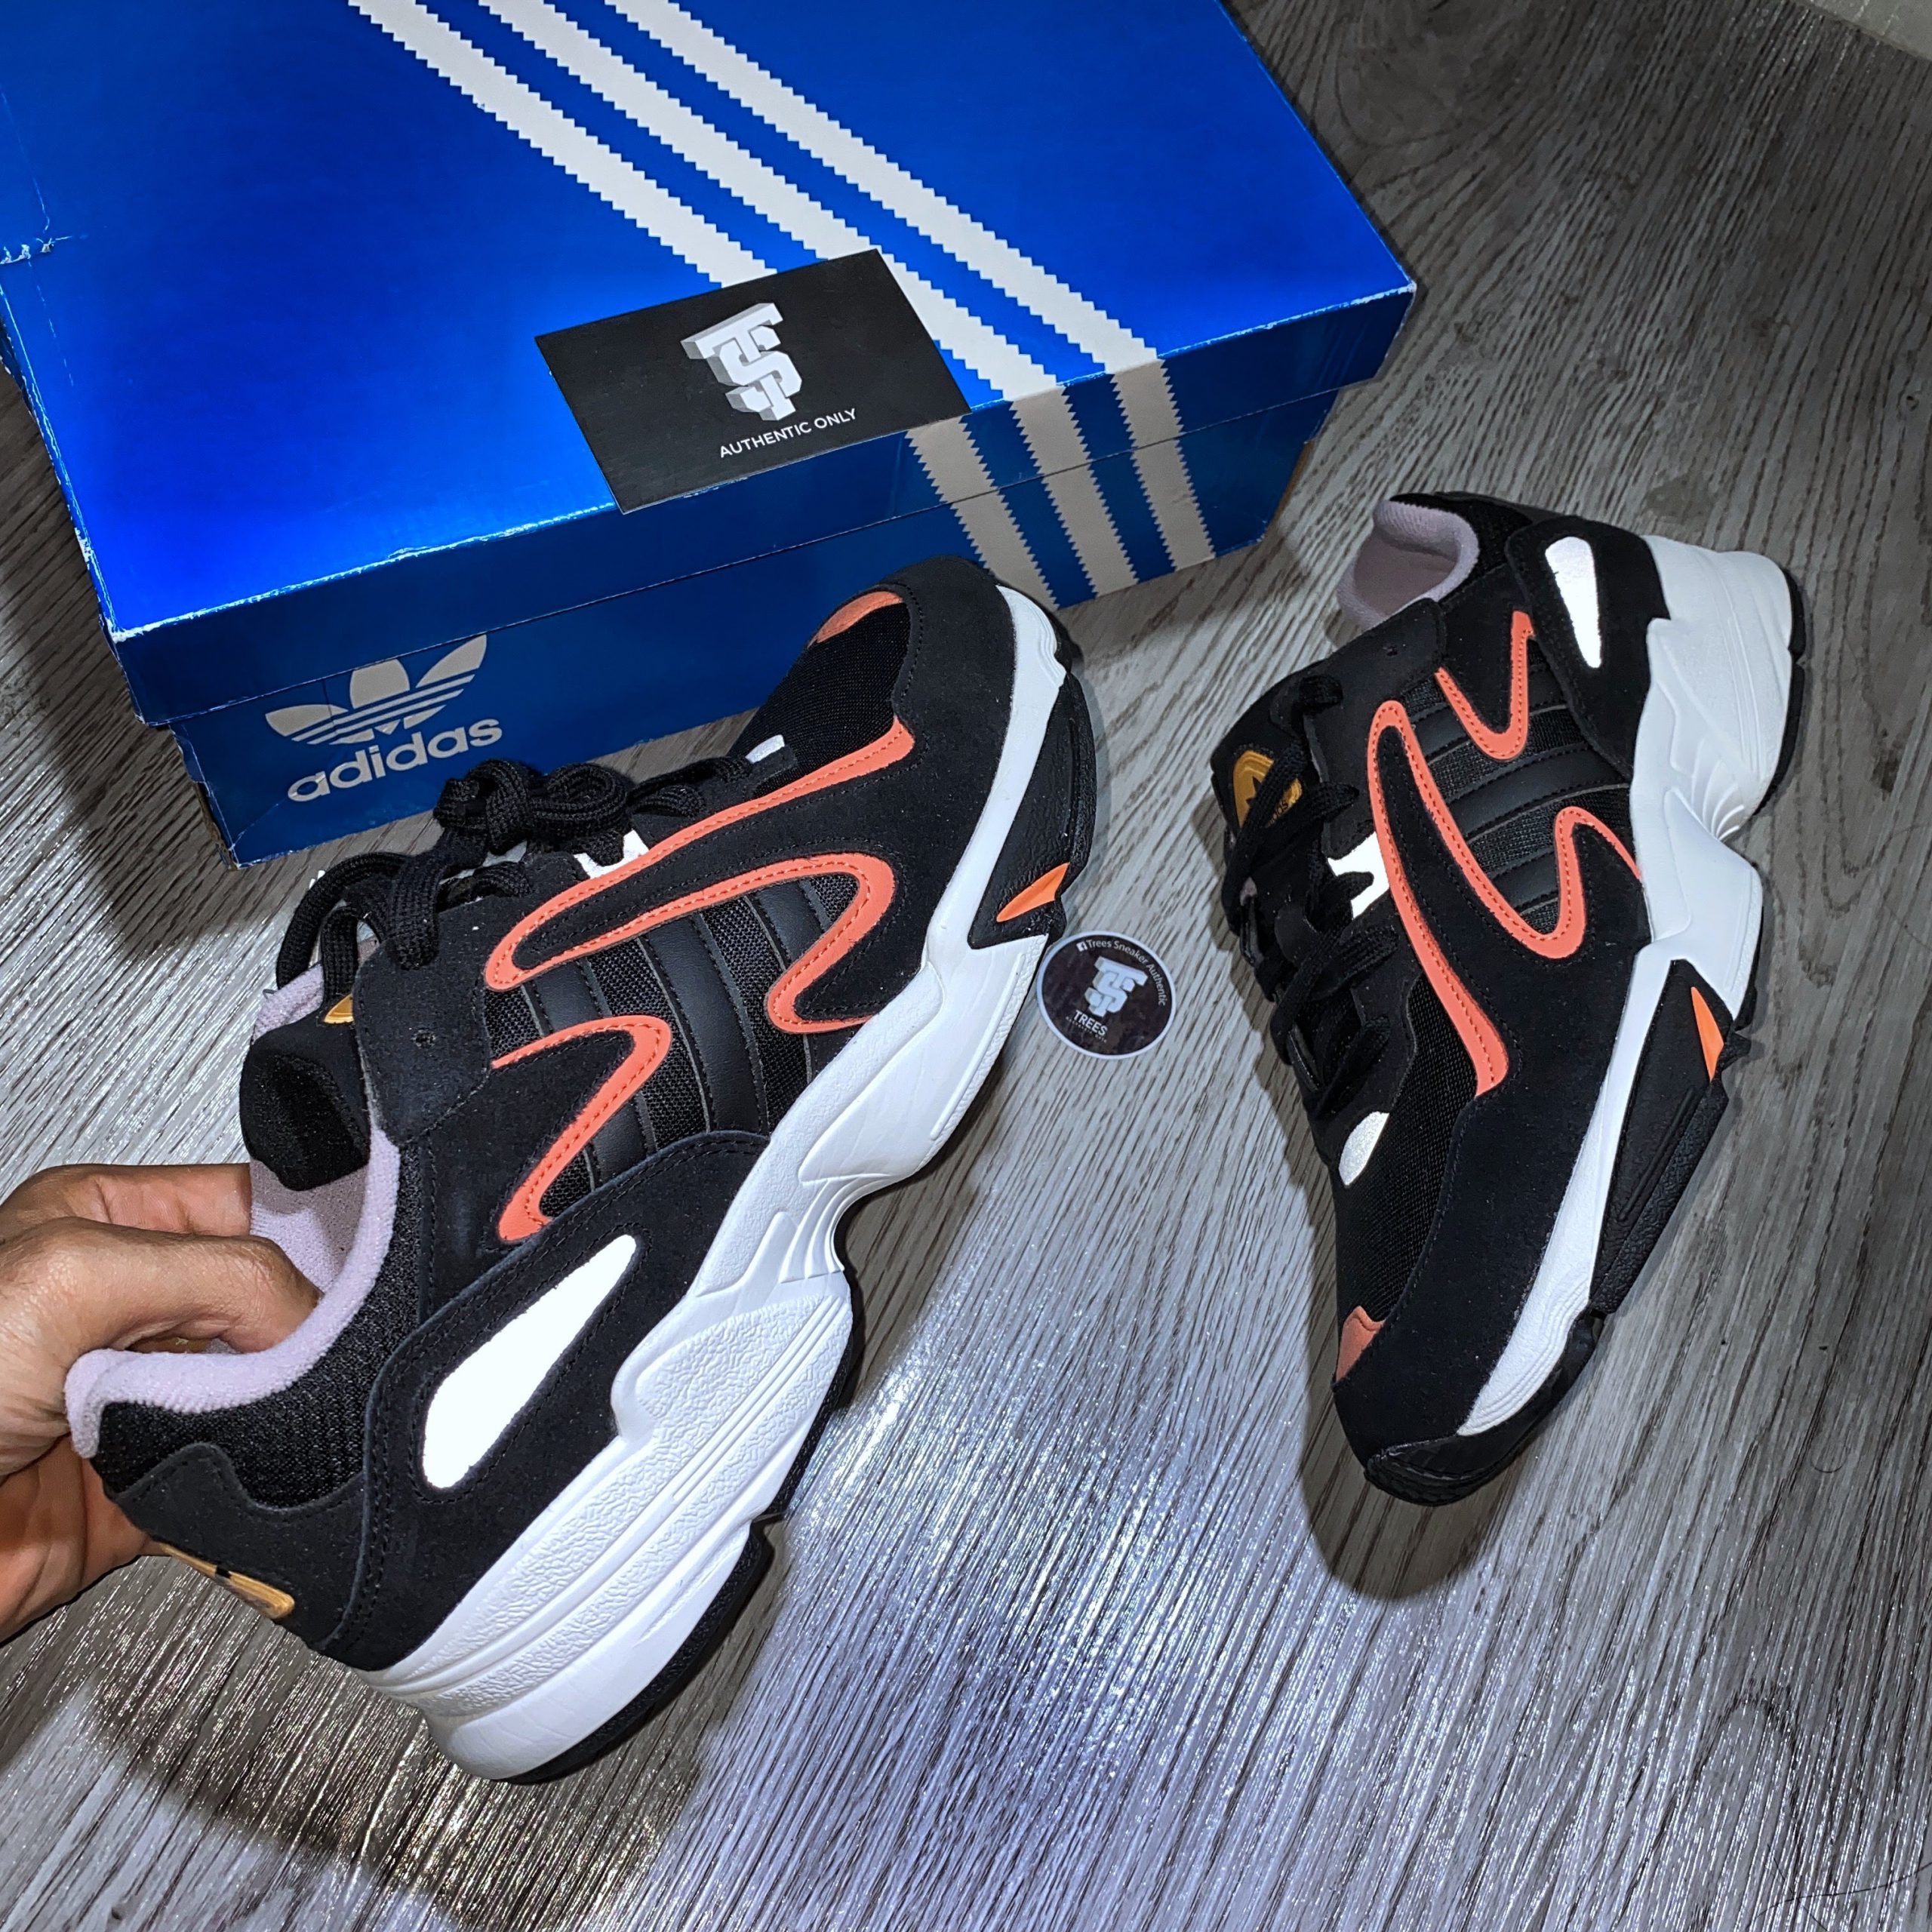 ADIDAS Yung - 96 Chasm Black Orange EE7234 - Trees Sneaker